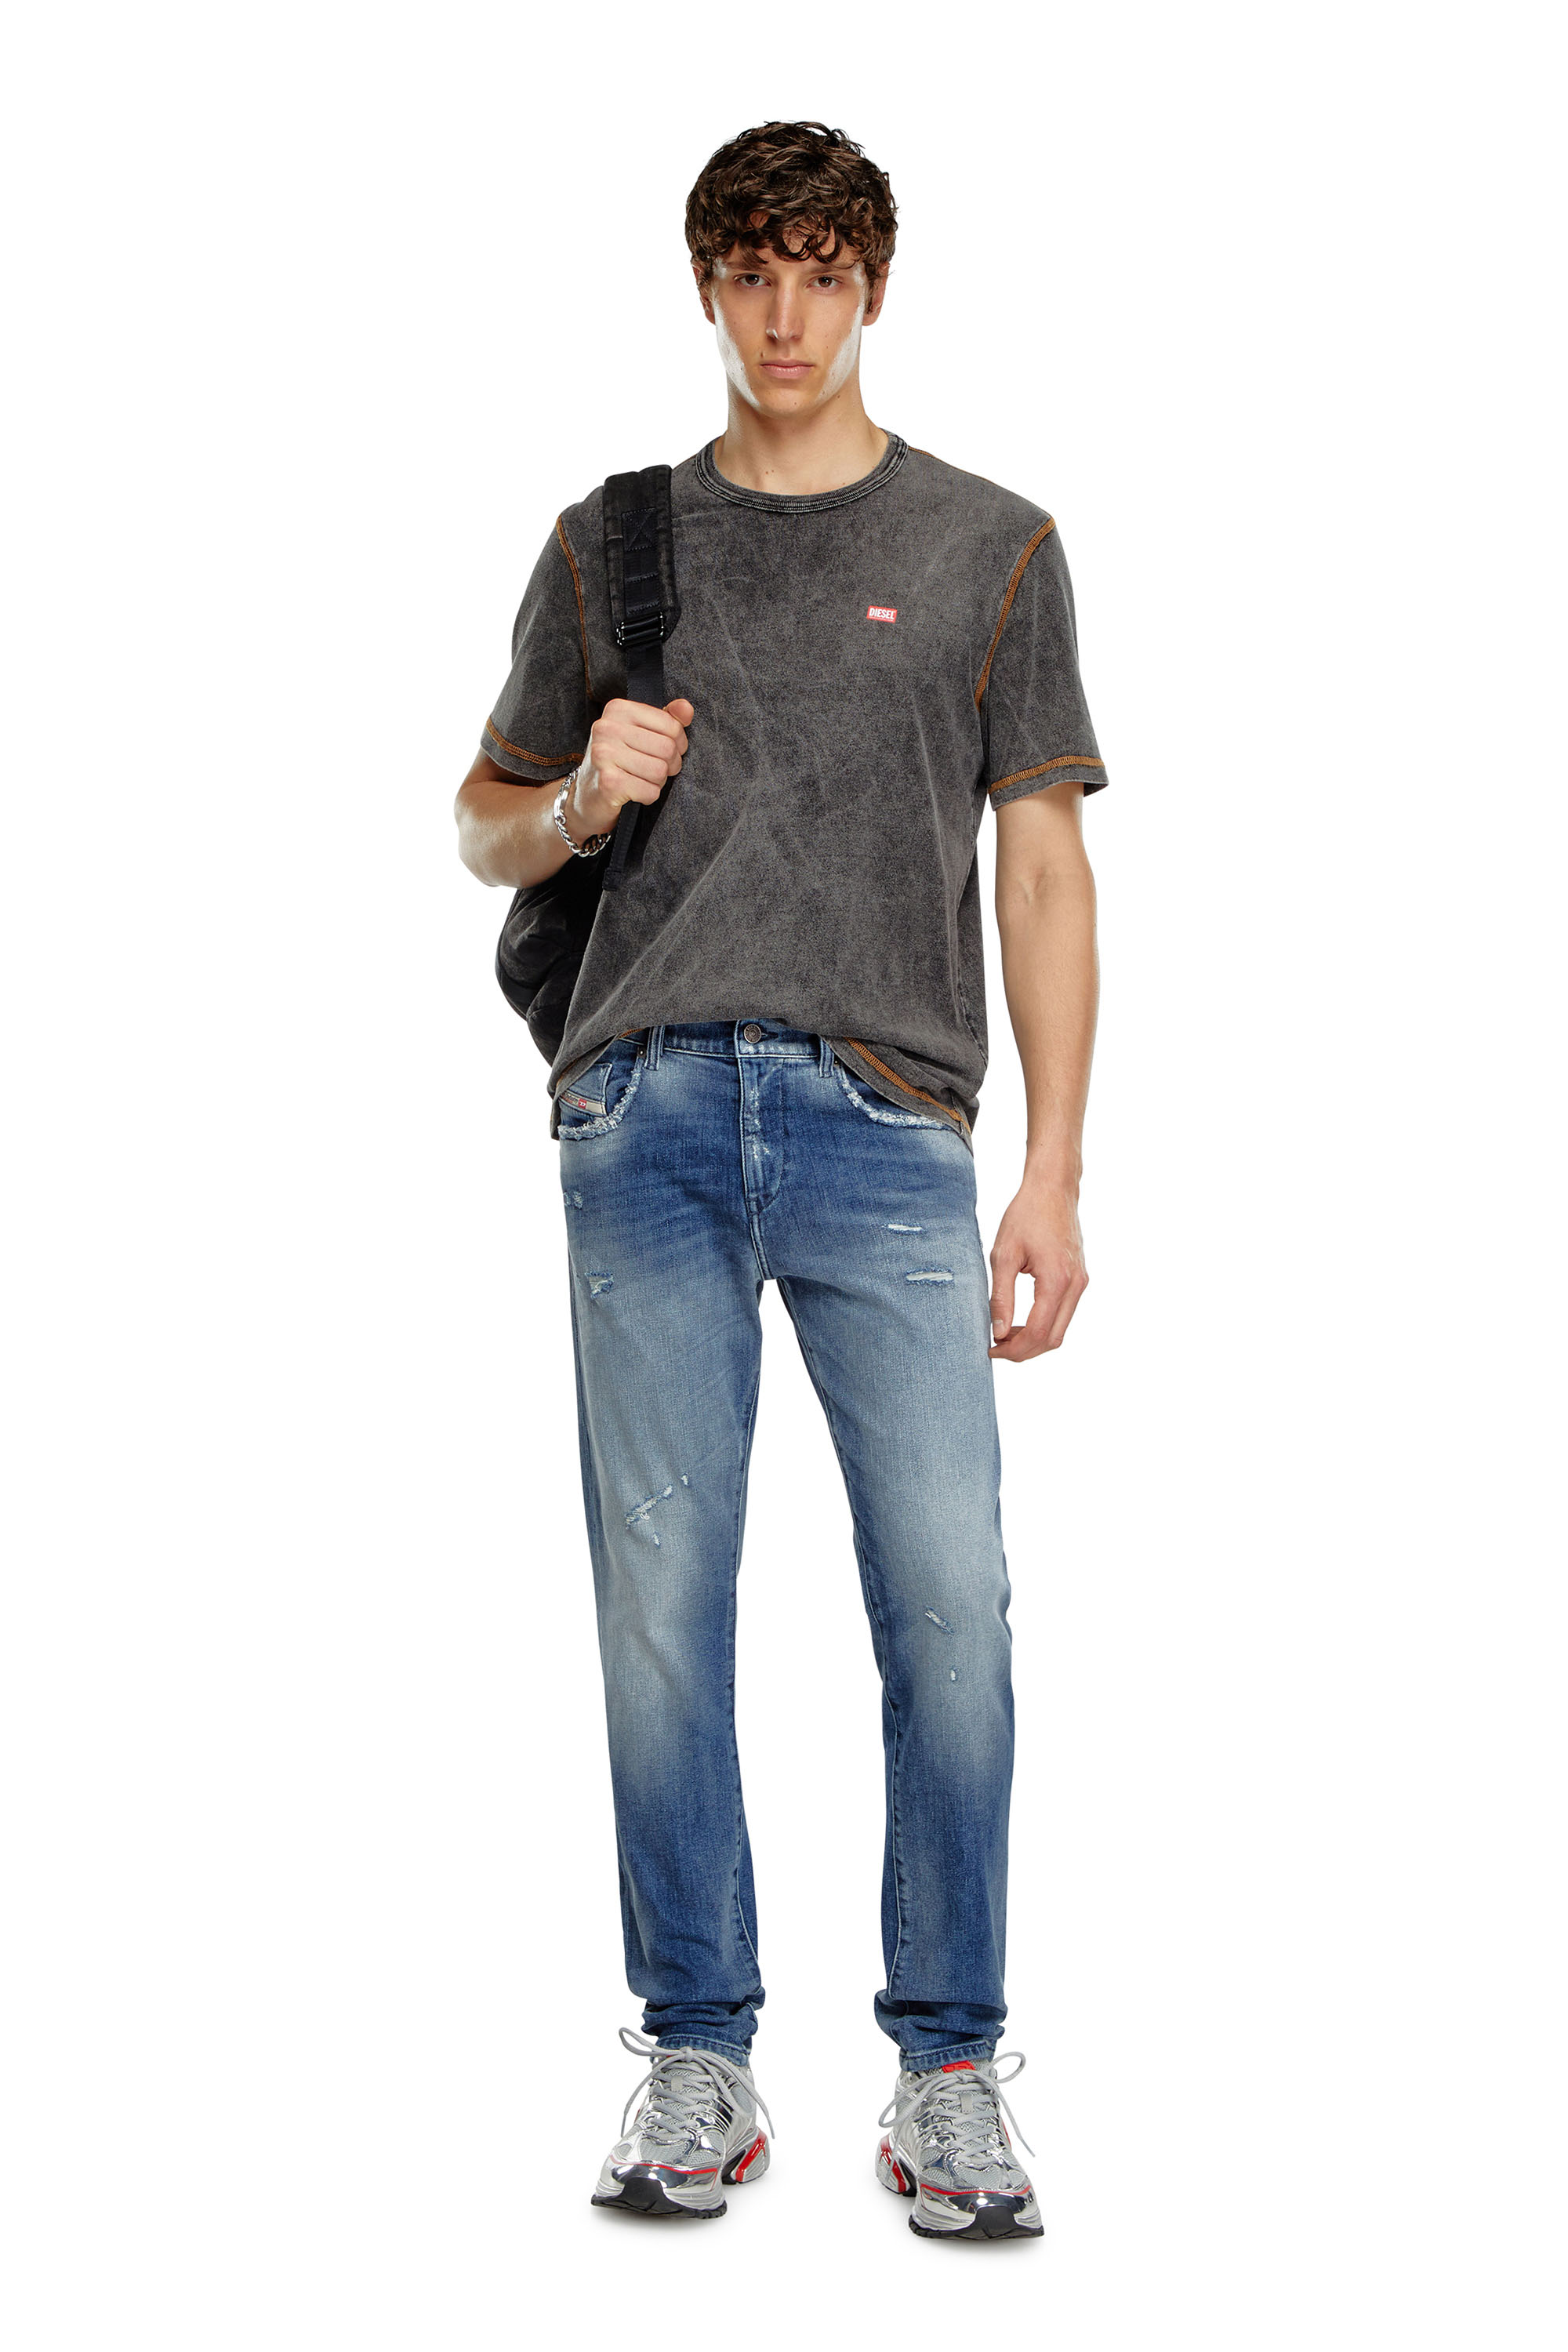 Diesel - Slim Jeans 2019 D-Strukt 09J61, Hombre Slim Jeans - 2019 D-Strukt in Azul marino - Image 1